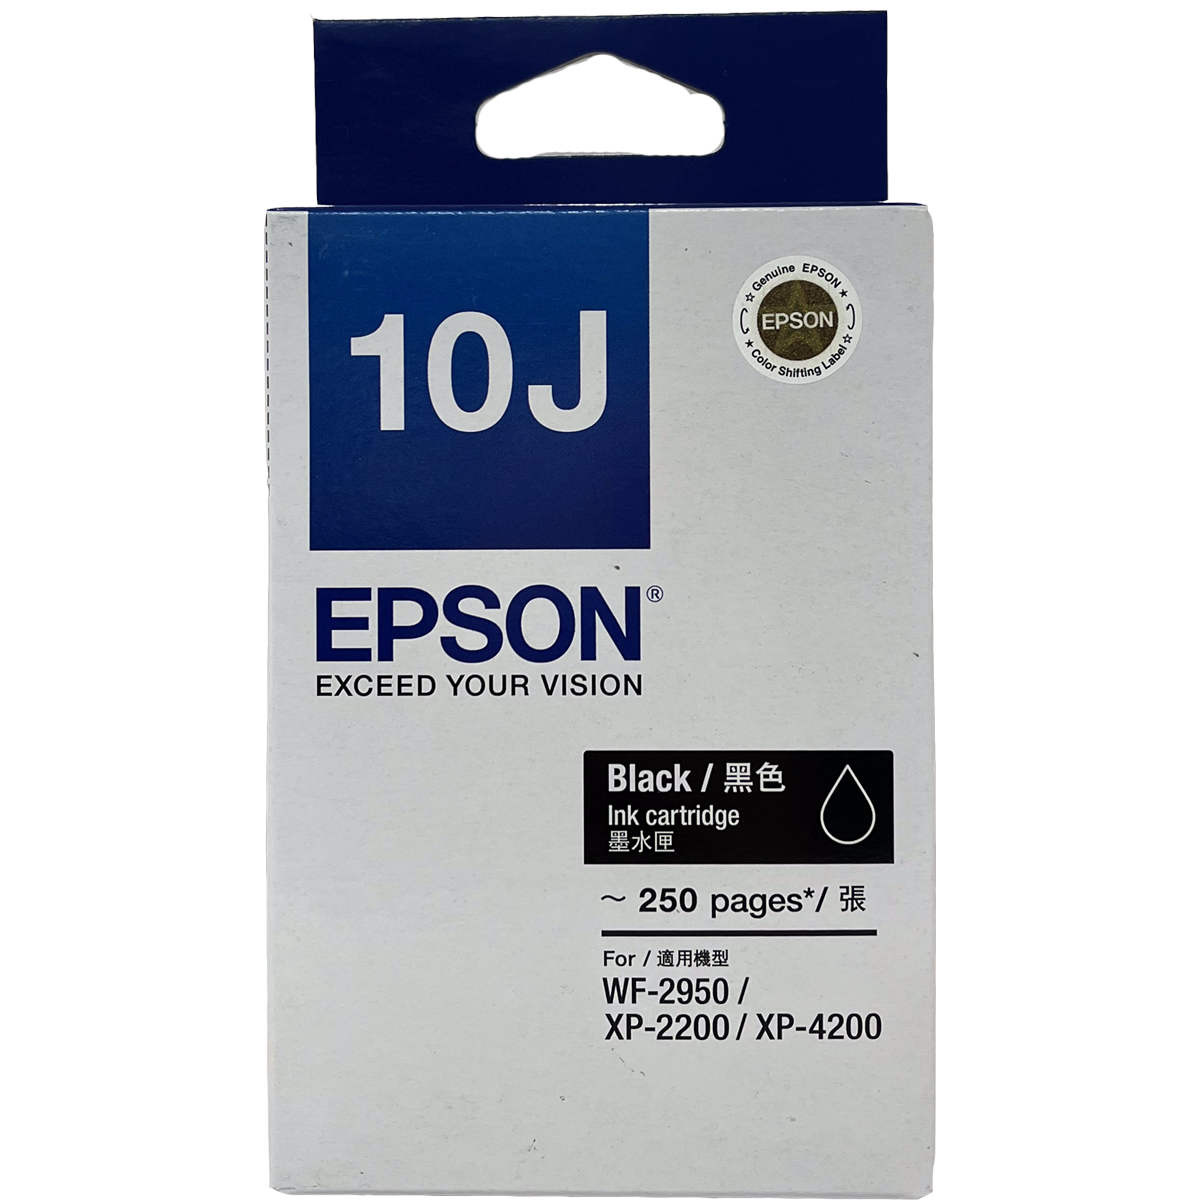 Epson 10J Black Ink Cartridge 黑色墨水匣 #C13T10J183